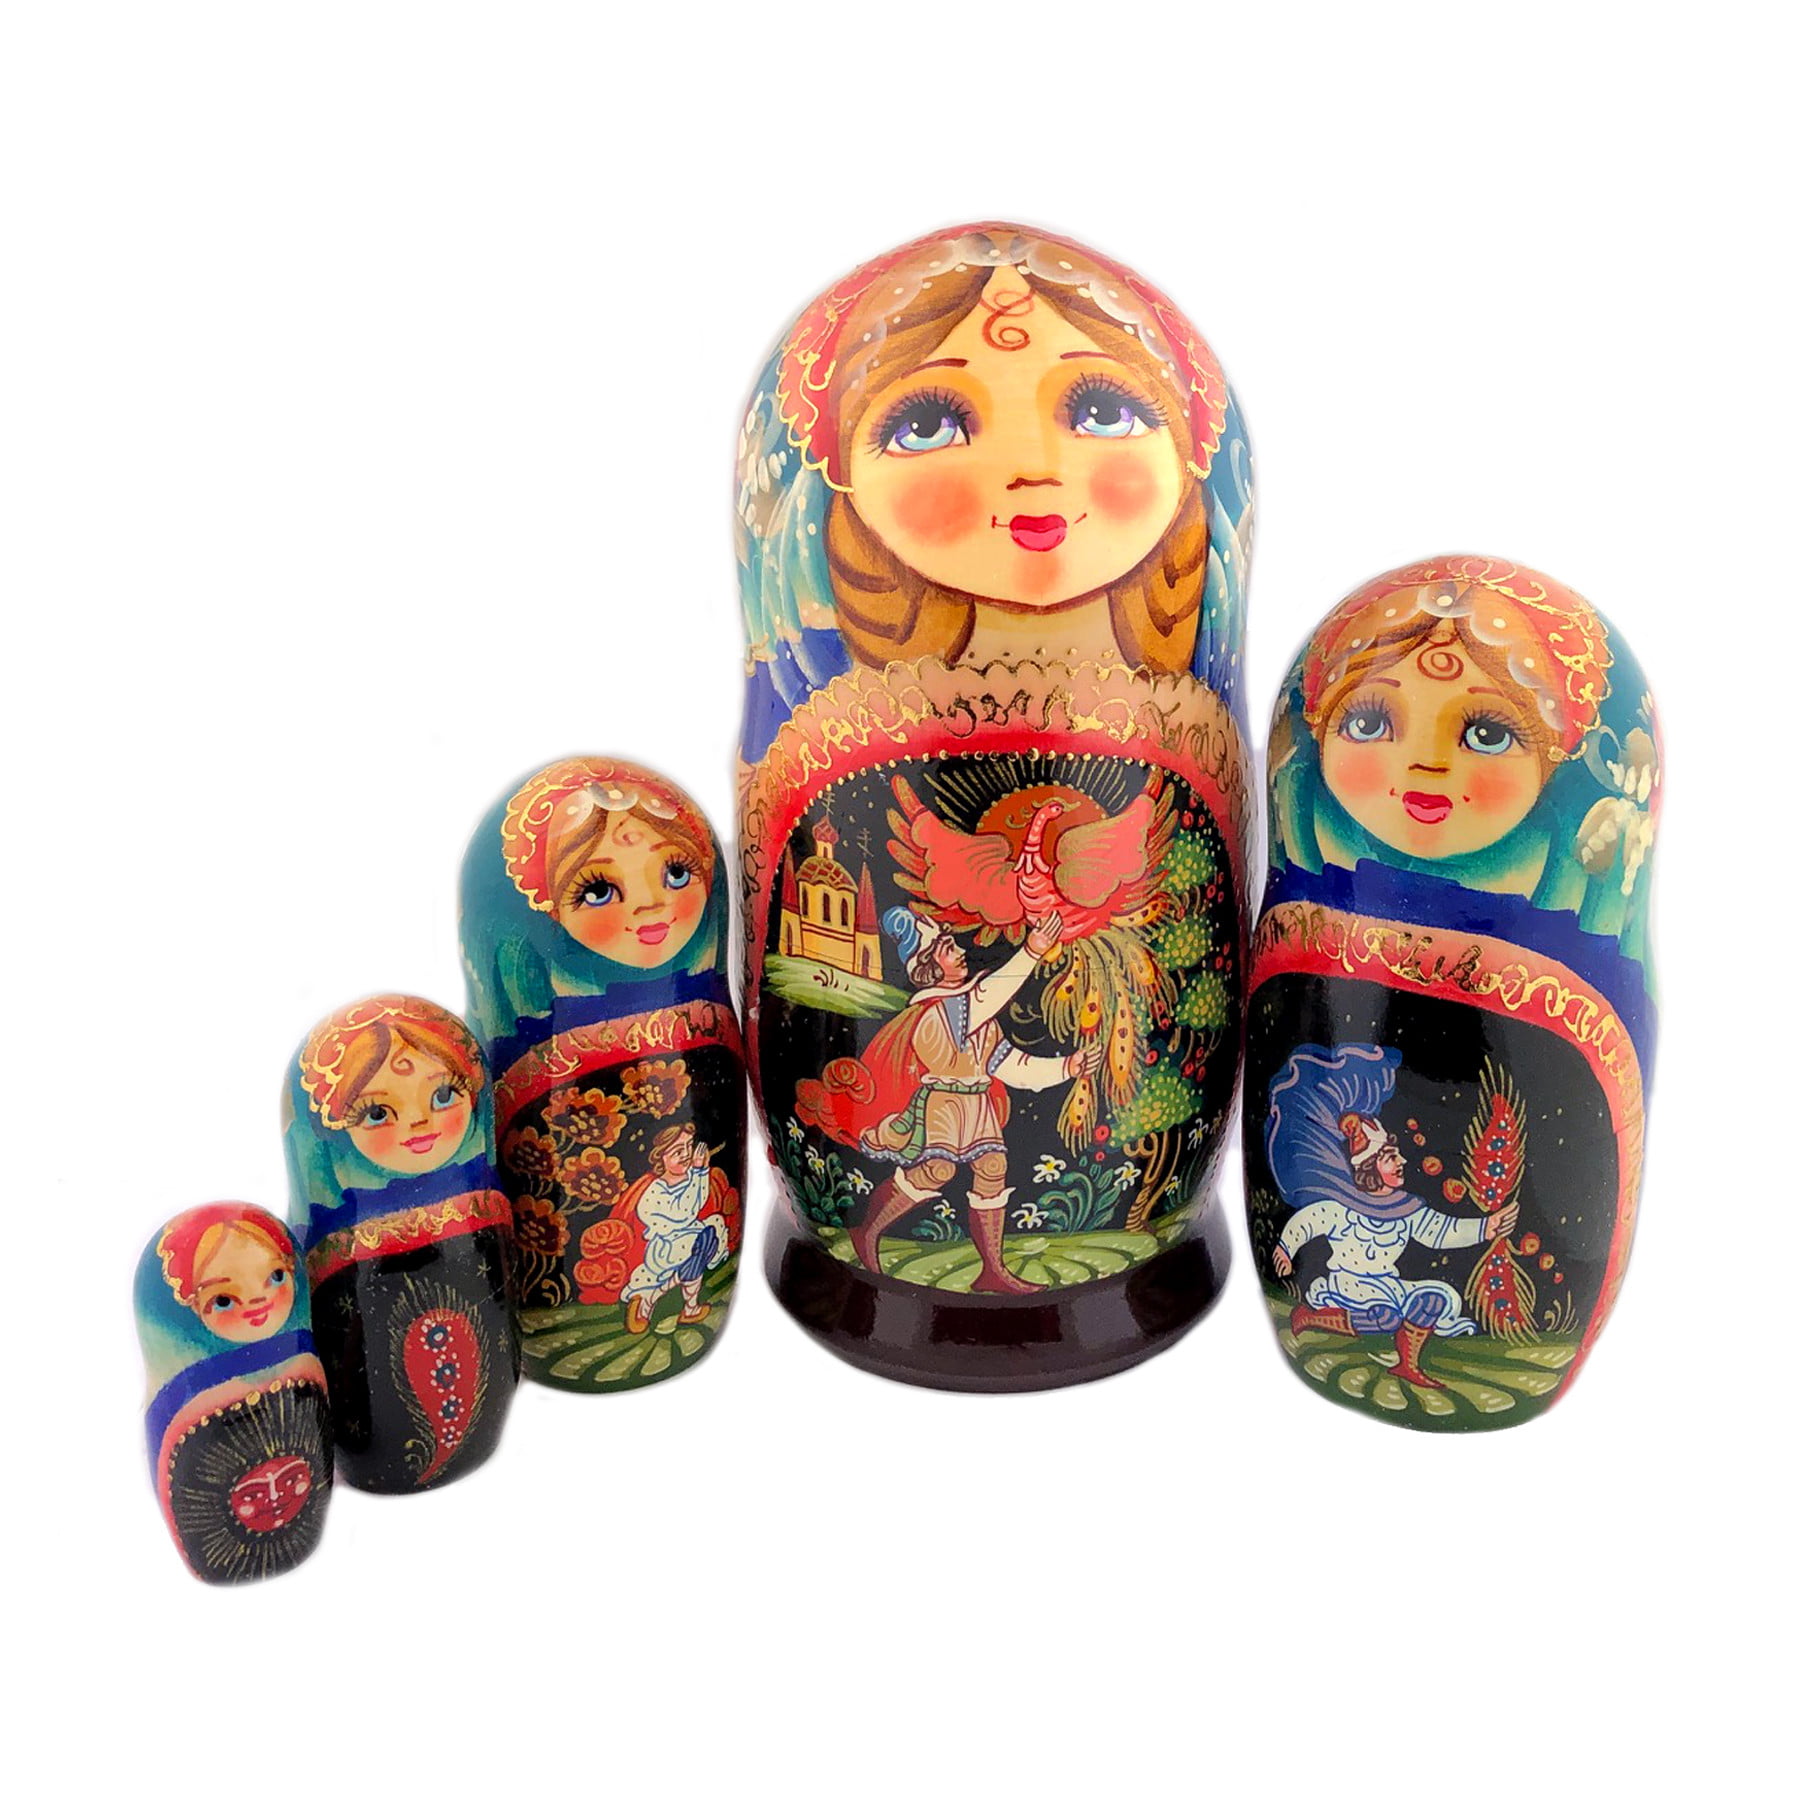 4 inches tall Wizard Of Oz Russian Nesting Doll 5-Piece Babushka Stacking Set 